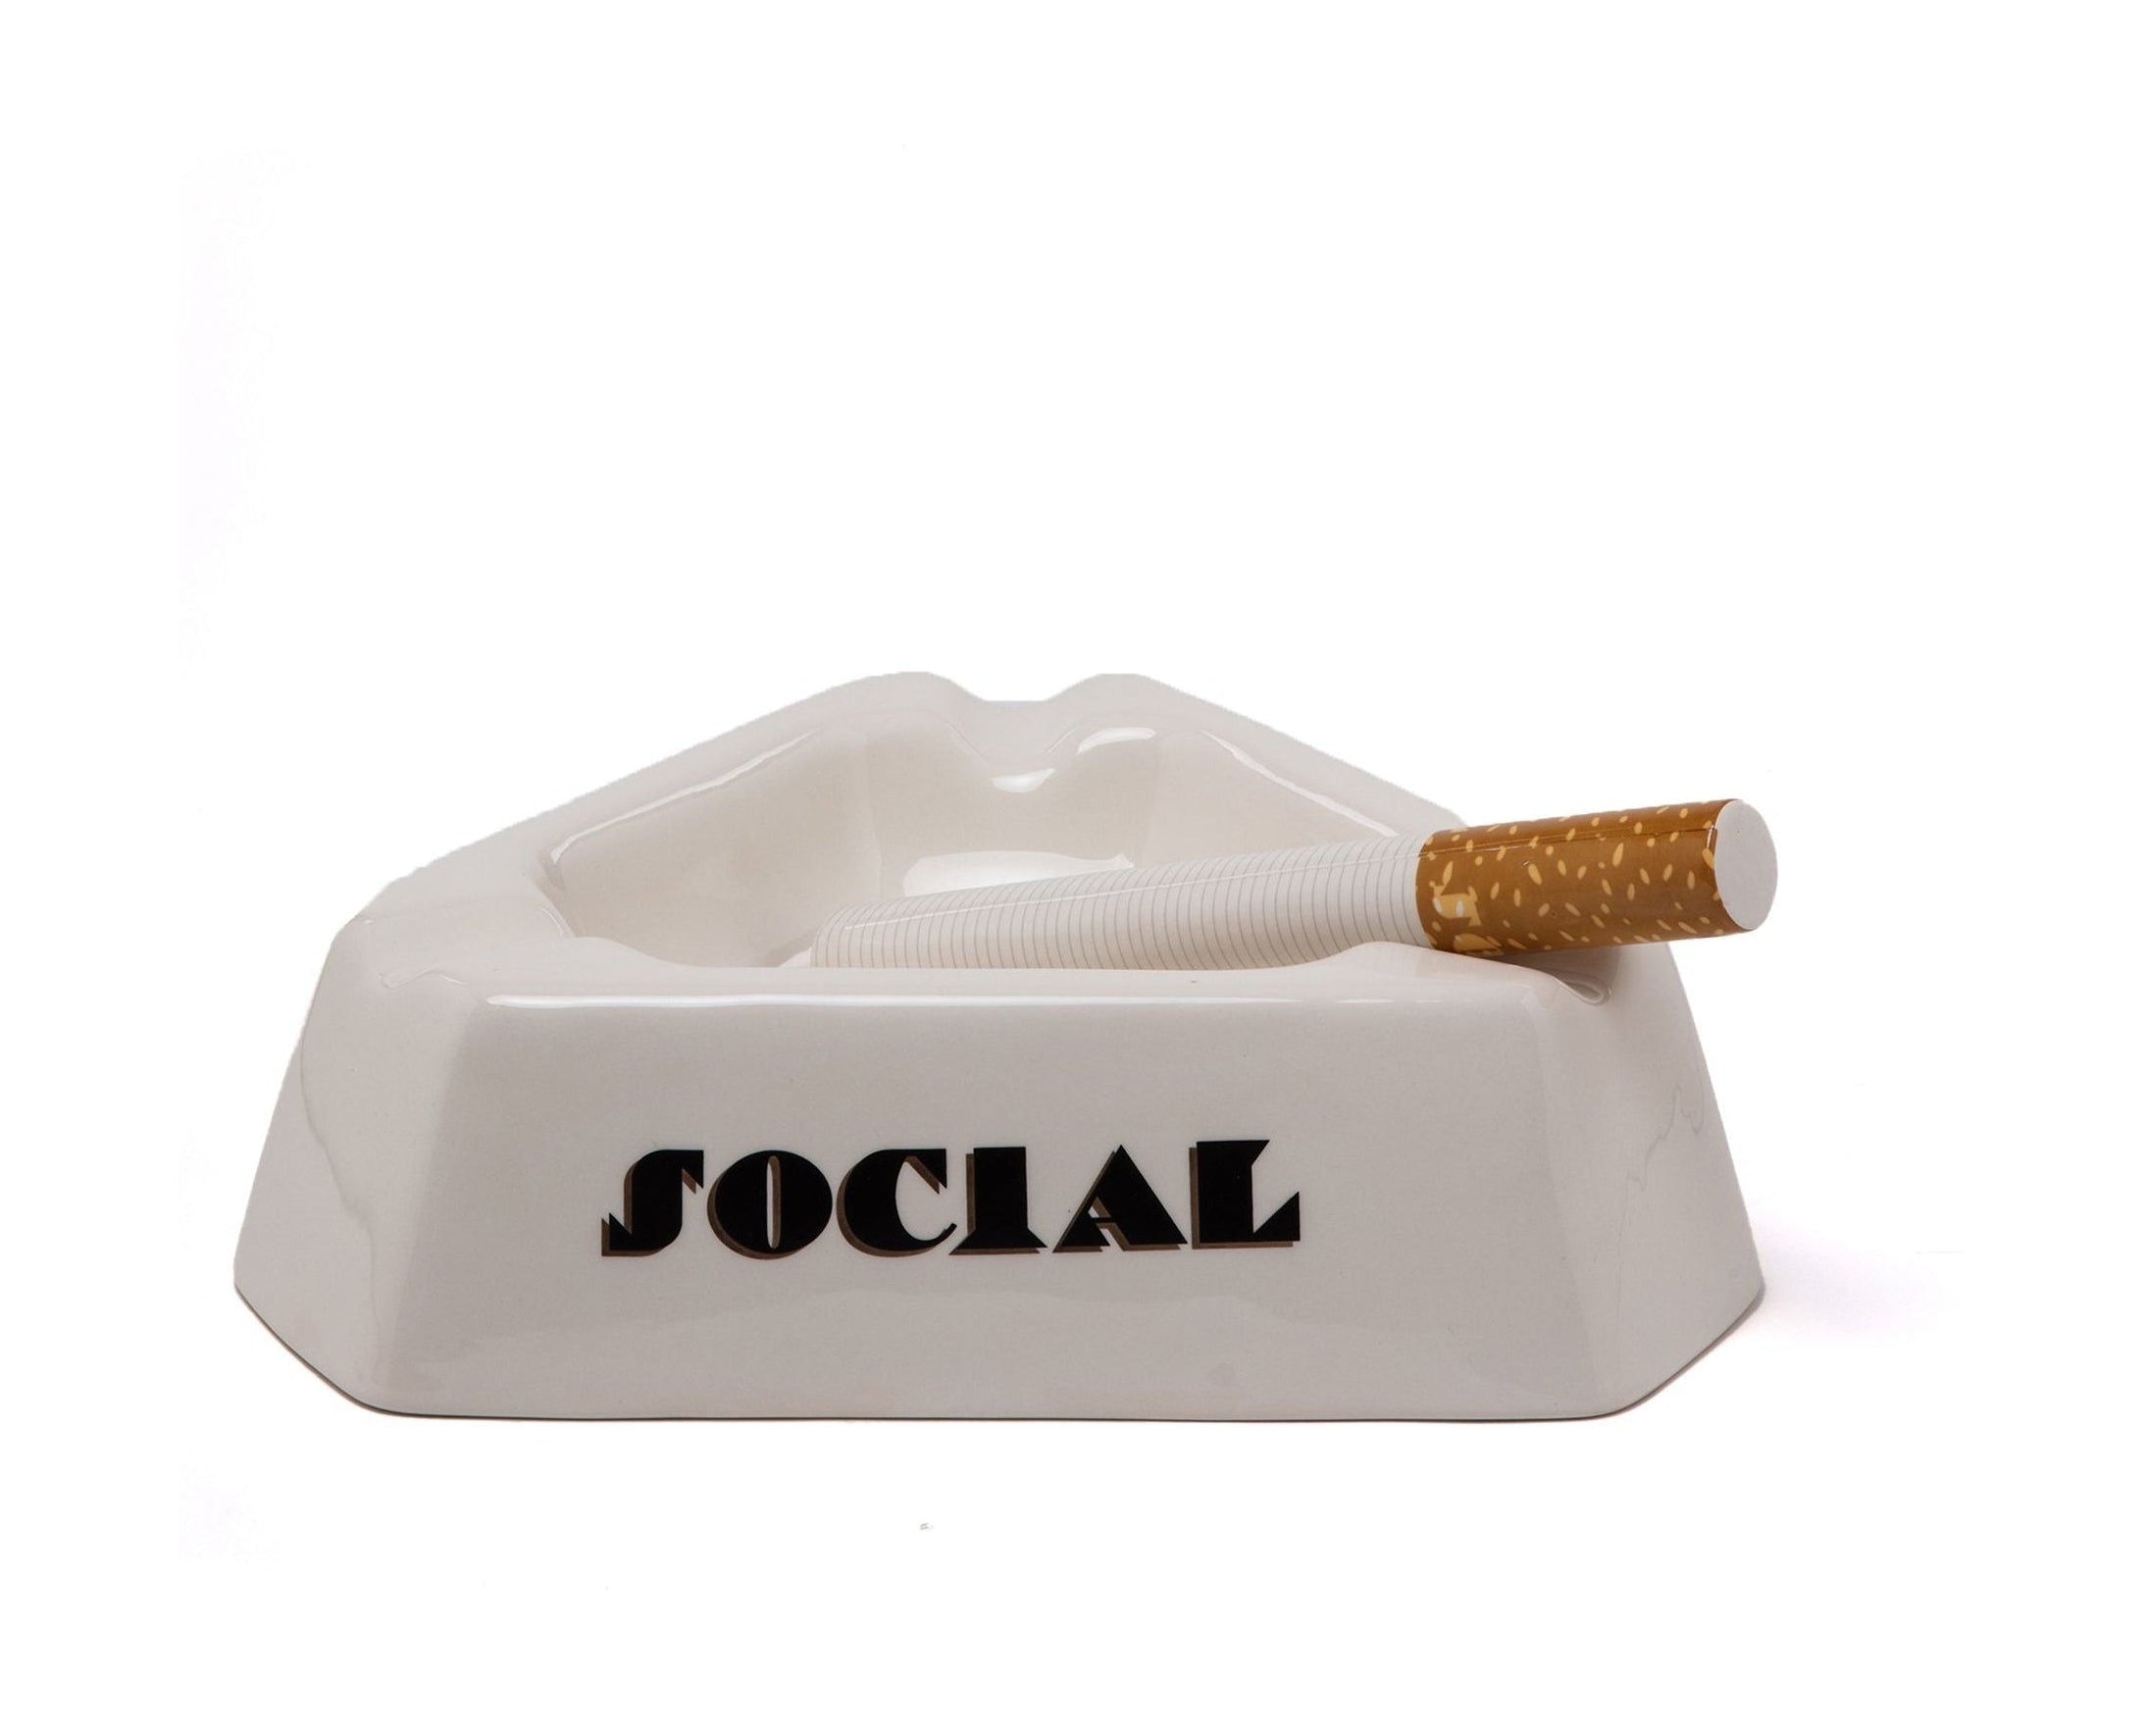 Corenteta de Seletti Social Smoker